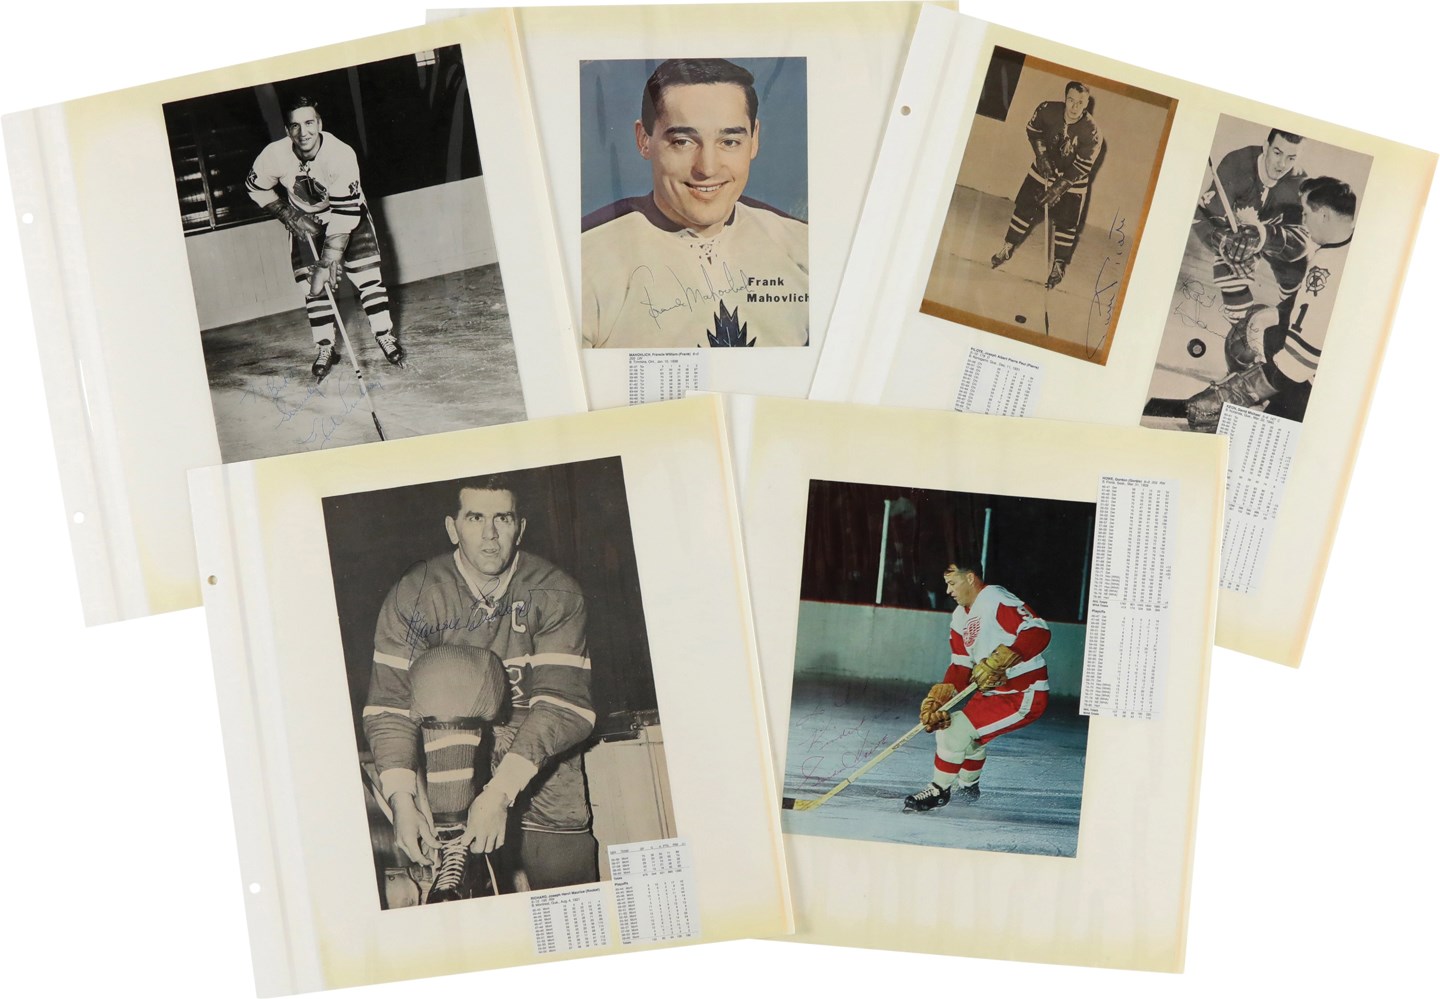 Hockey - Signed Hockey Photo and Magazine Images with Cuts (37)